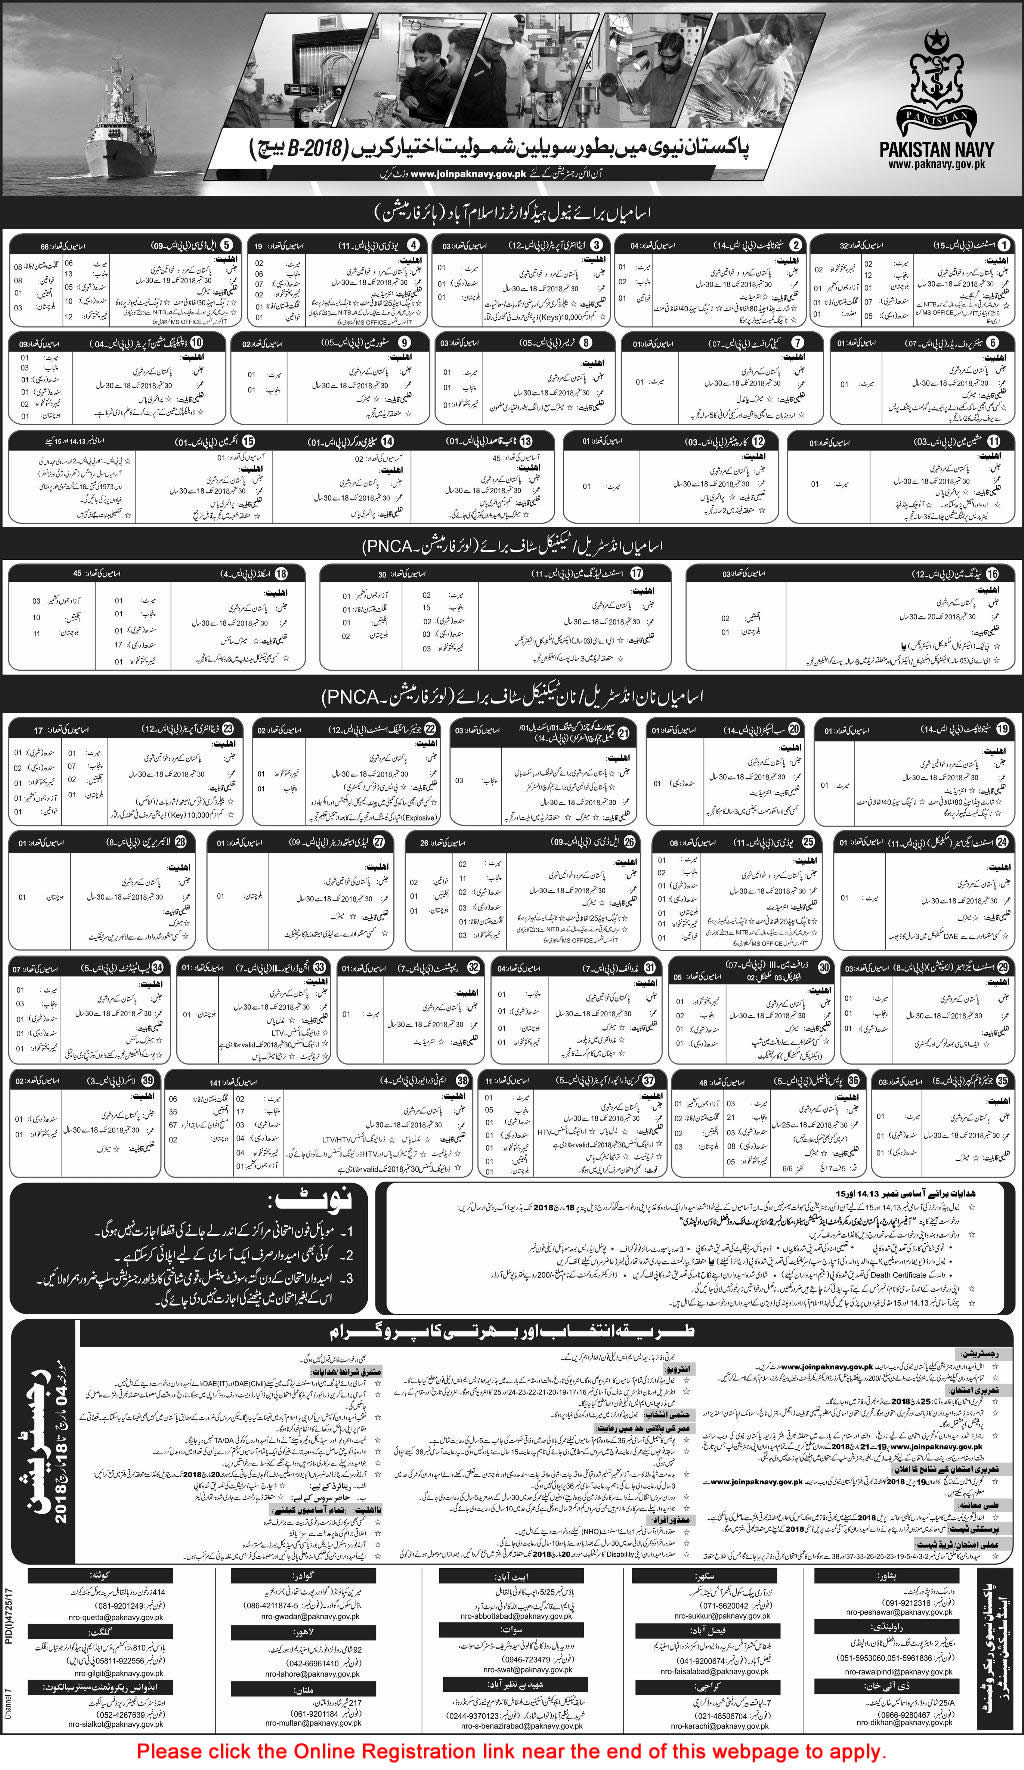 Pakistan Navy Civilian Jobs 2018 March Online Registration Join in 2018-B Batch Latest / New